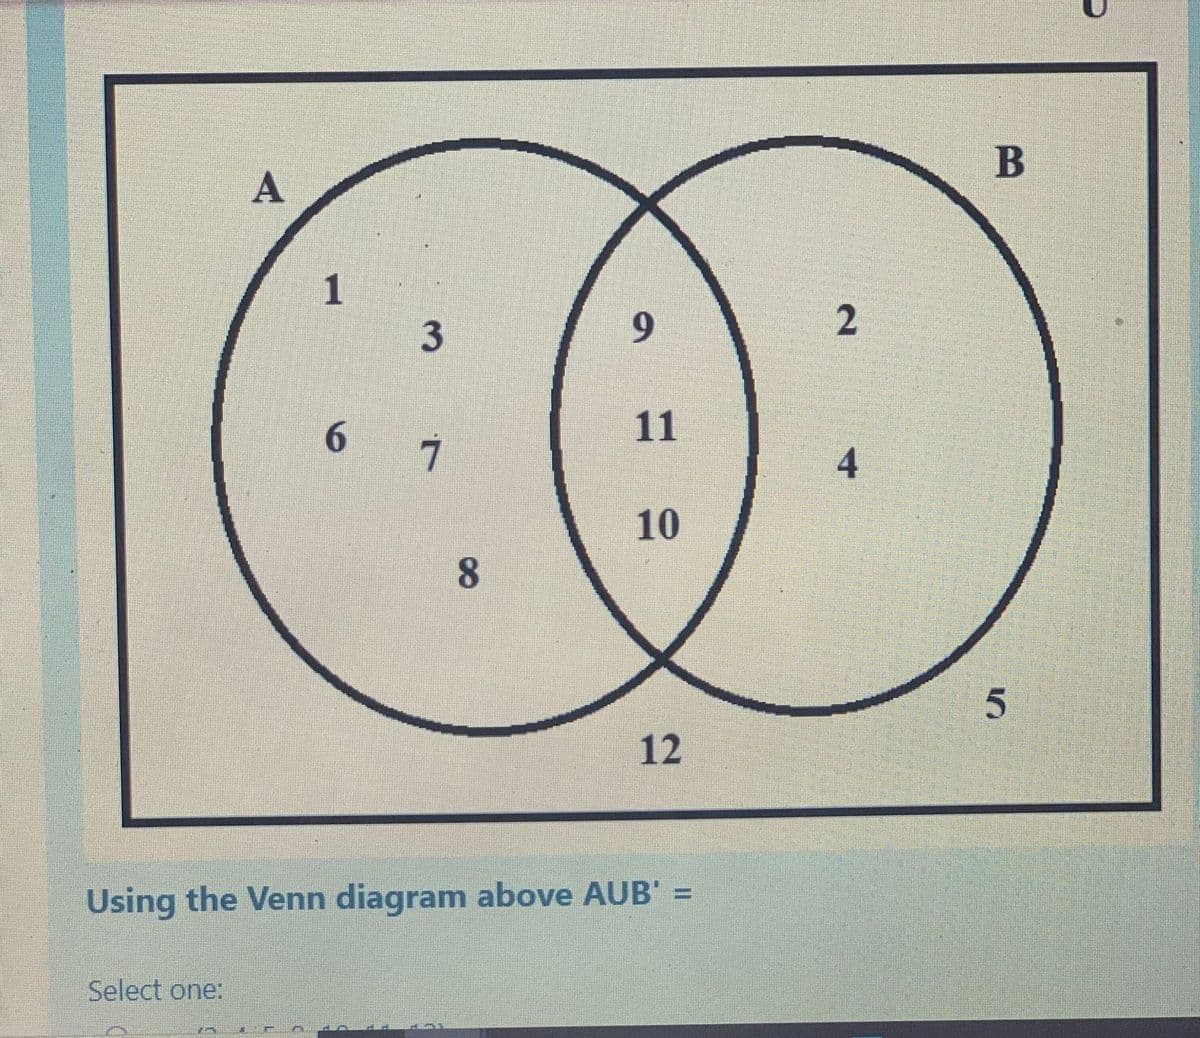 A
Select one:
1
6
3
7
8
9
10
12
Using the Venn diagram above AUB
2
4
B
5